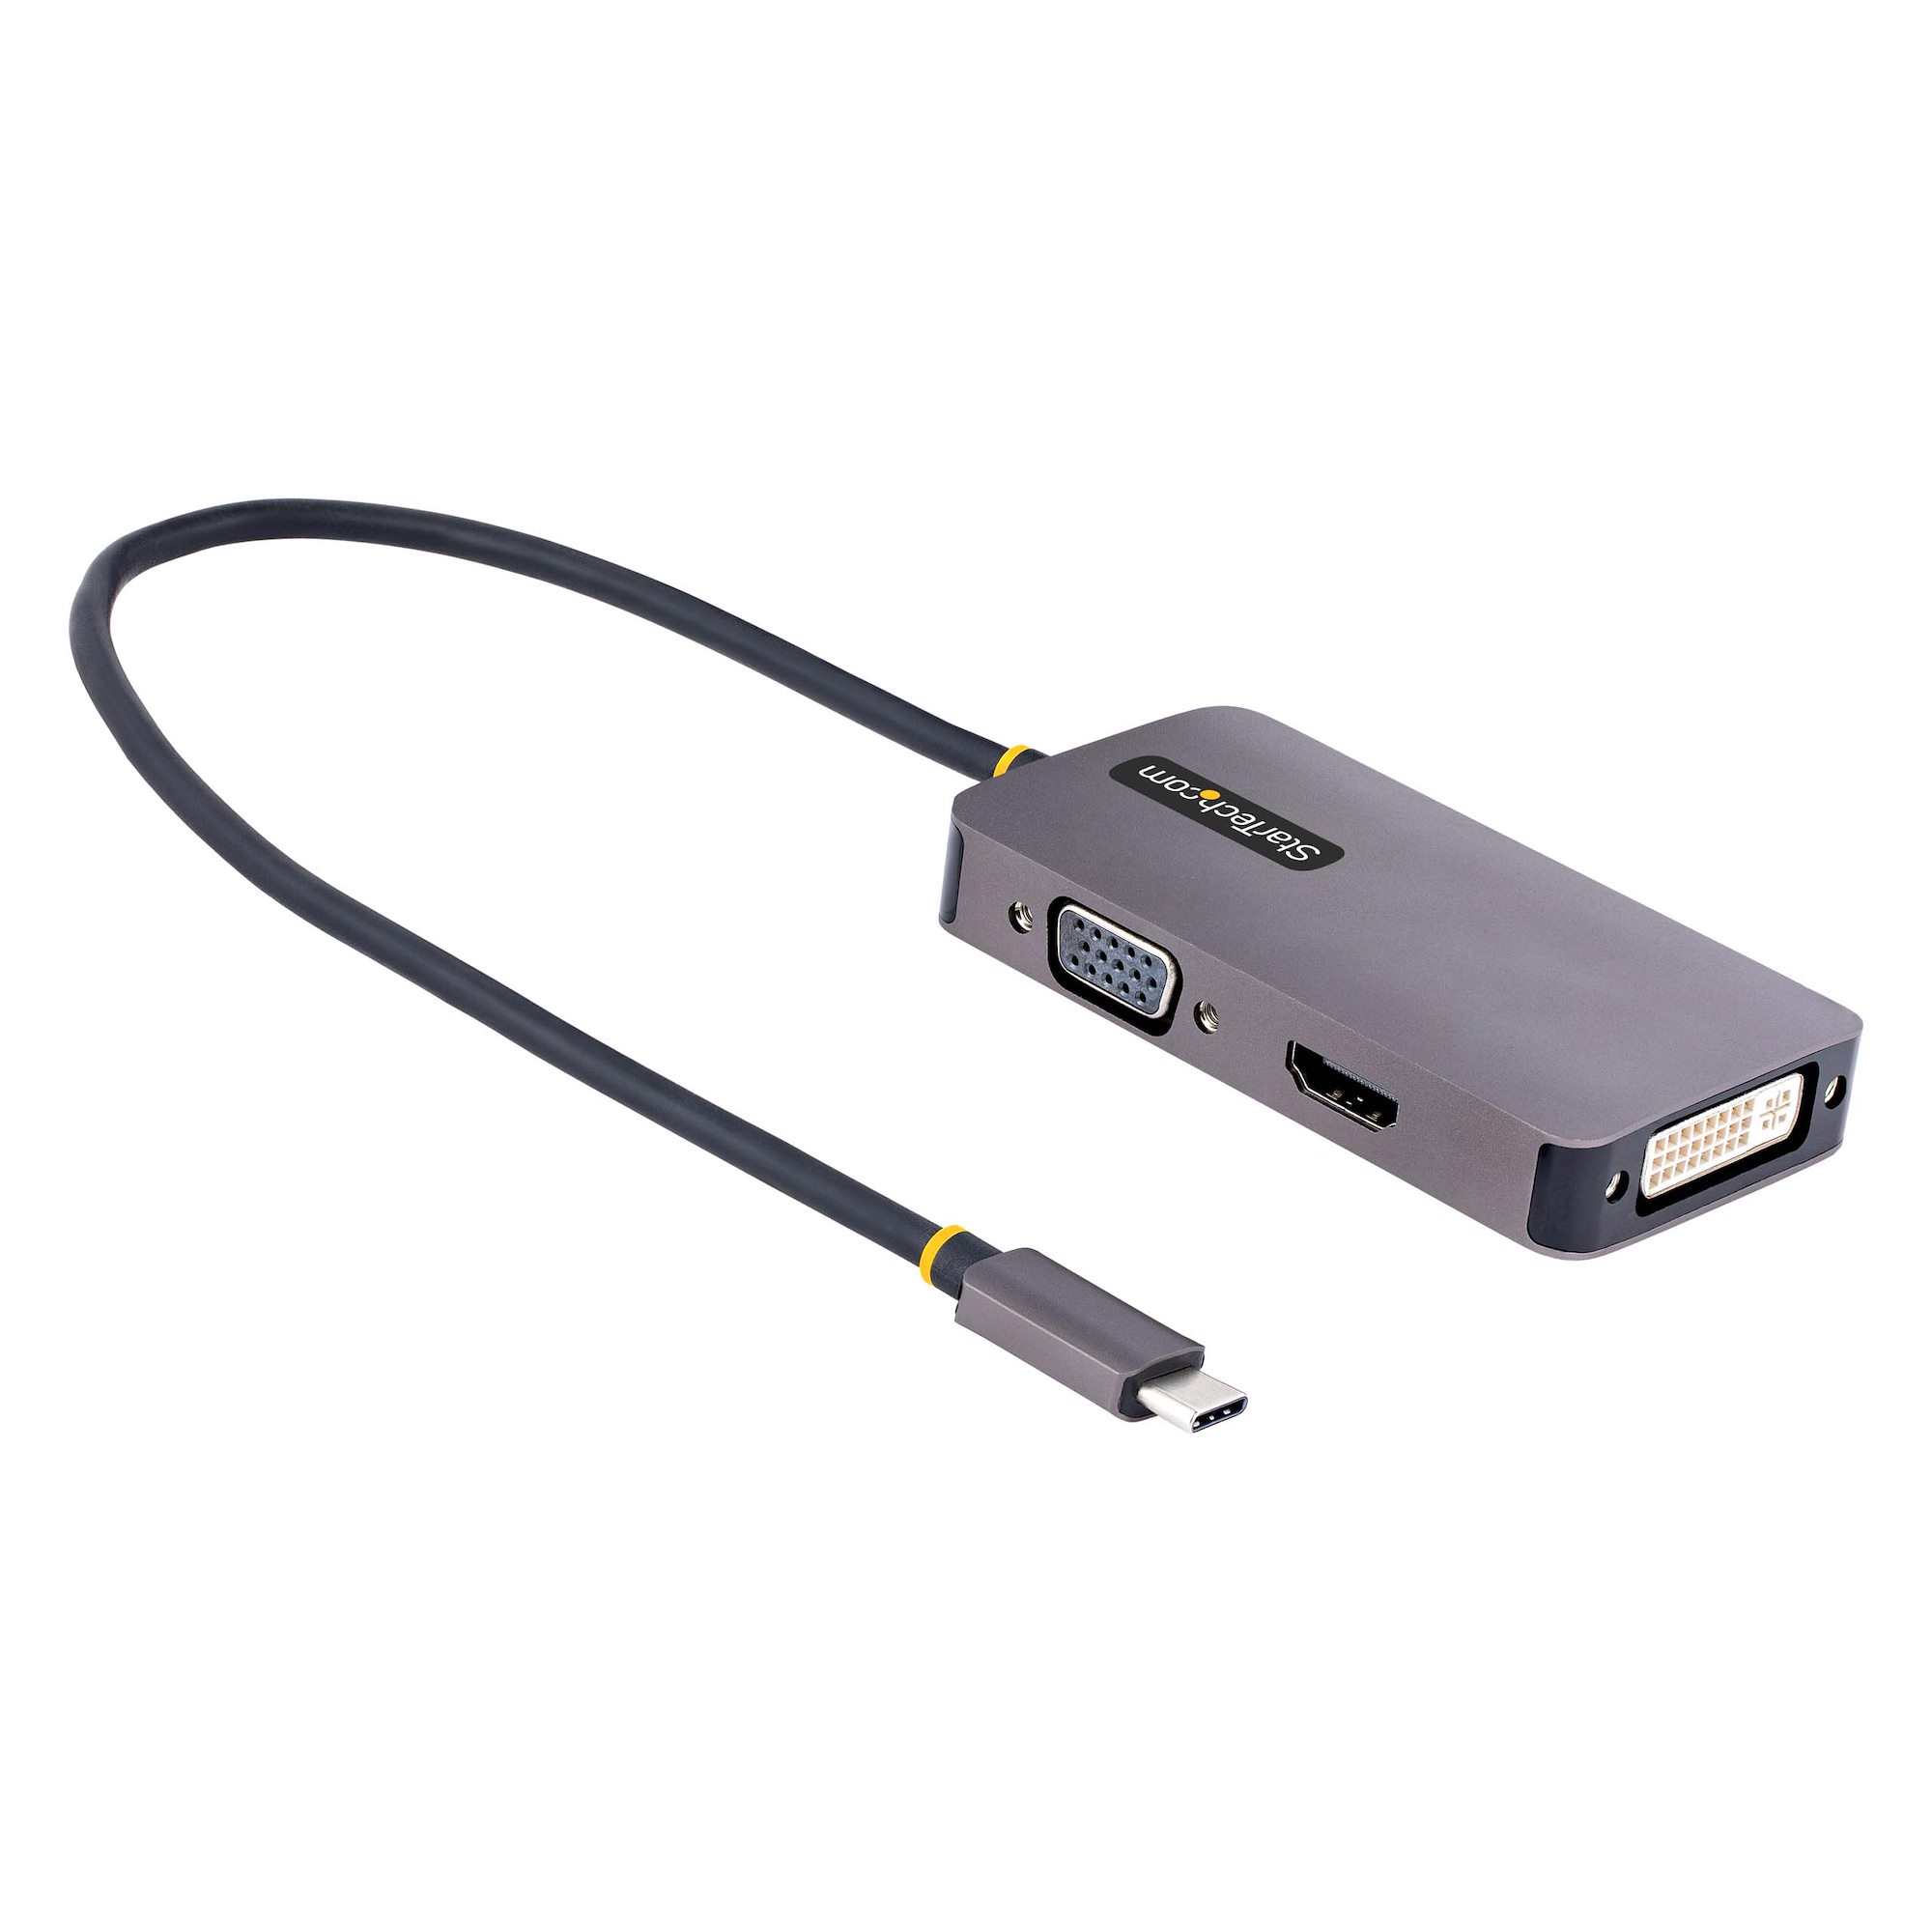 【118-USBC-HDMI-VGADVI】USB C VIDEO ADAPTER TO HDMI DVI